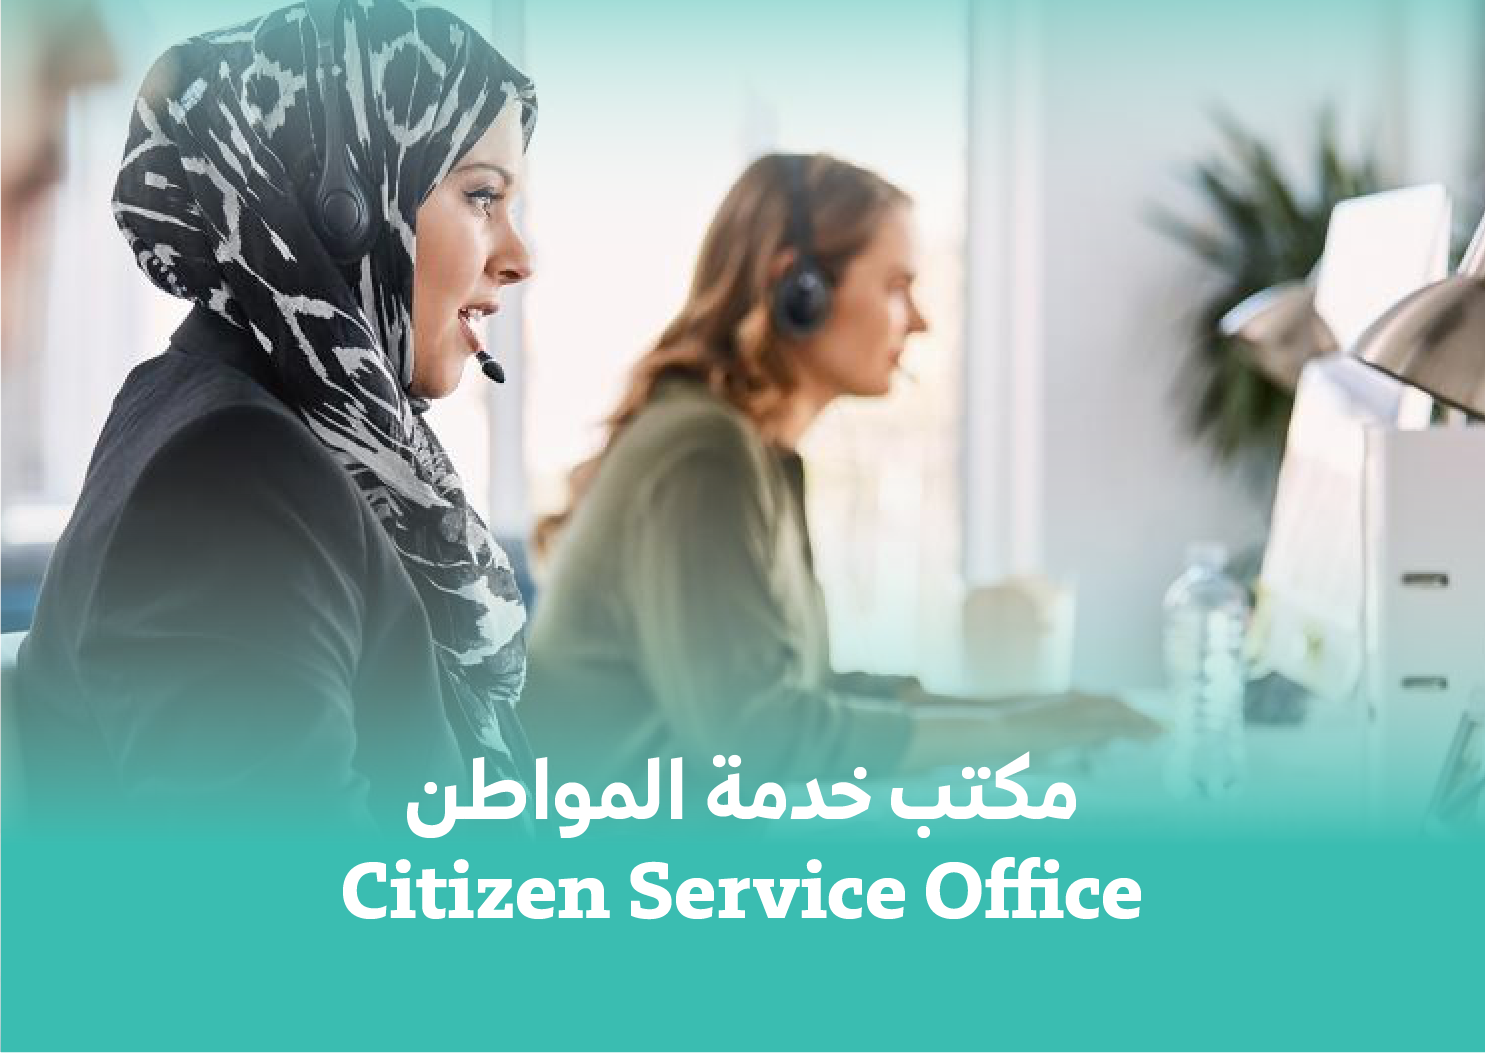 Citizen Service Office